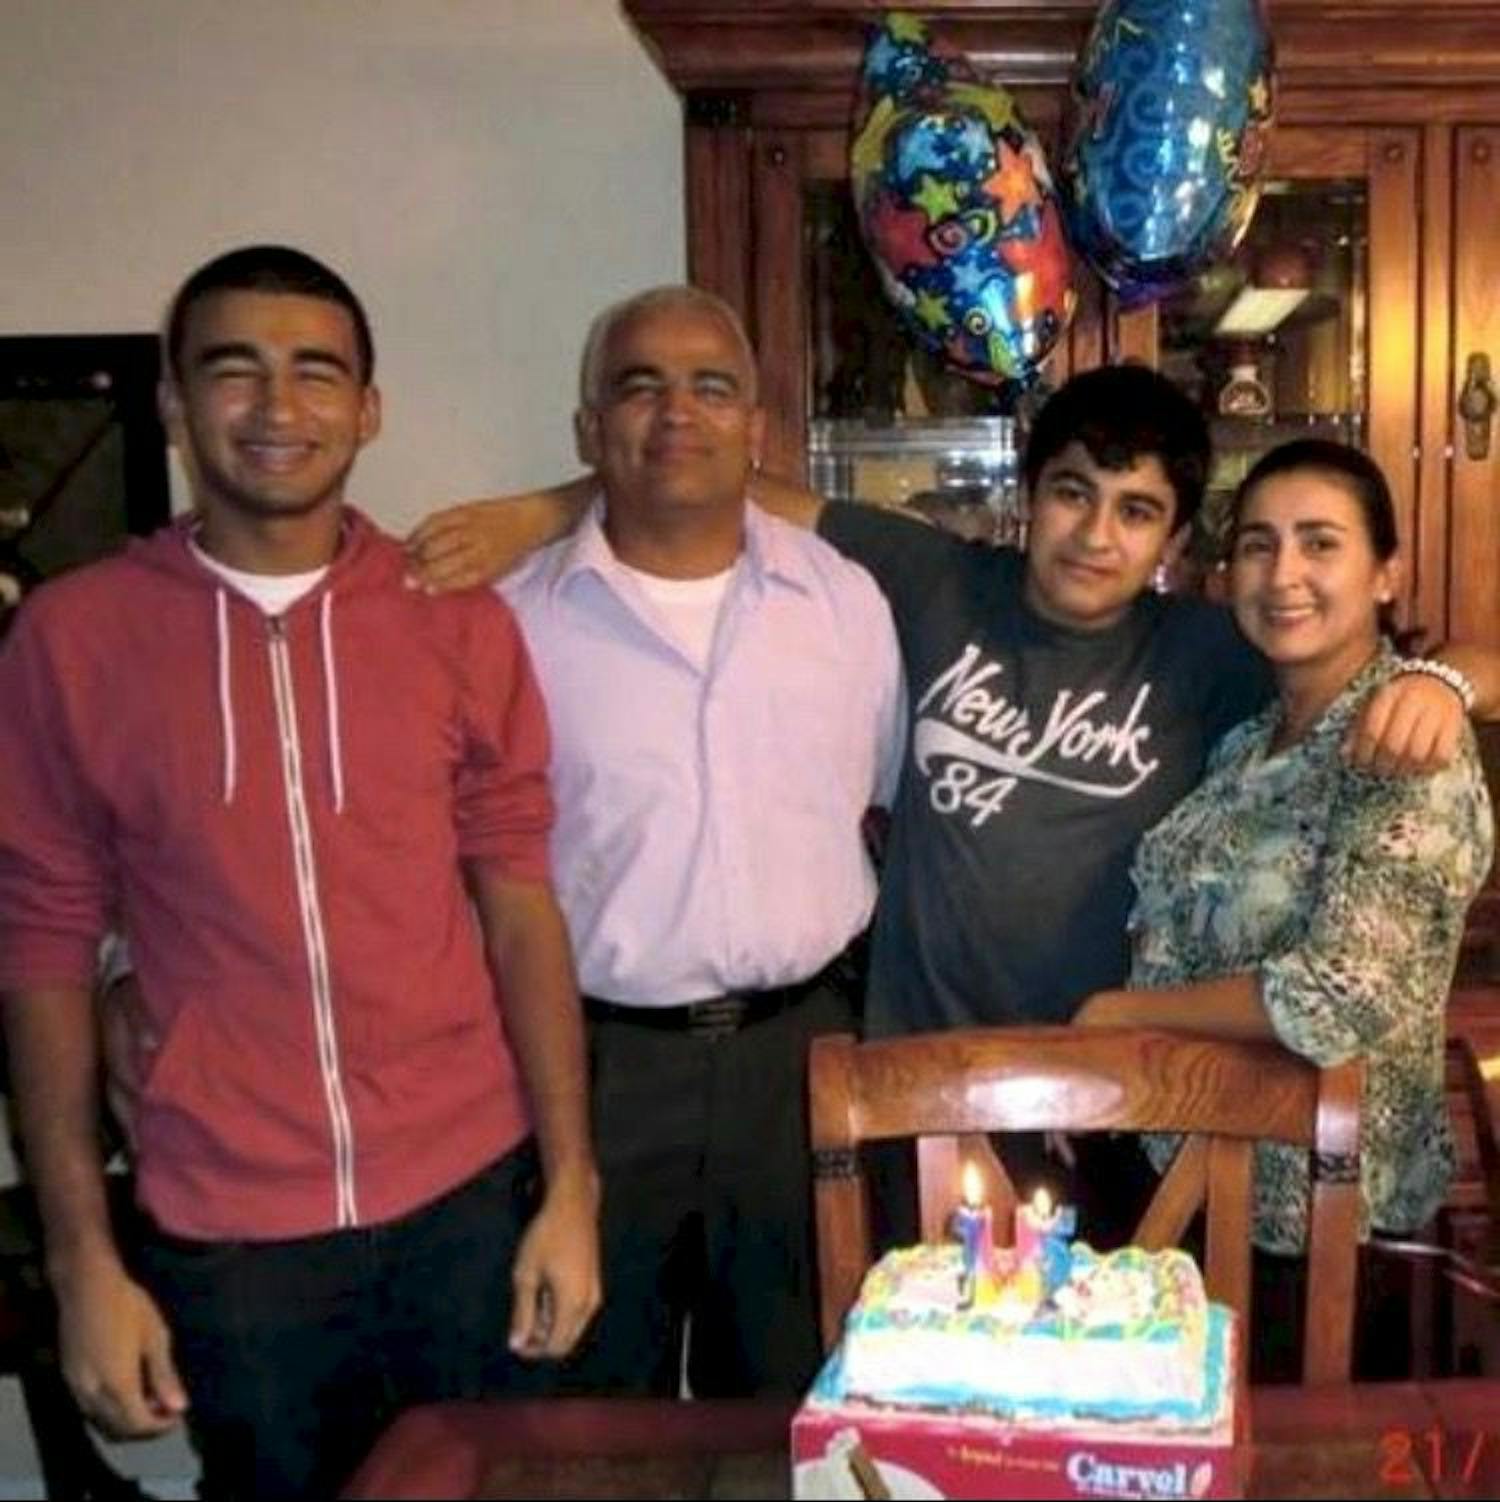 Christian Aguilar, Carlos Aguilar, Alex Aguilar and Claudia Aguilar pose for a photo on Alex's 15th birthday.
&nbsp;